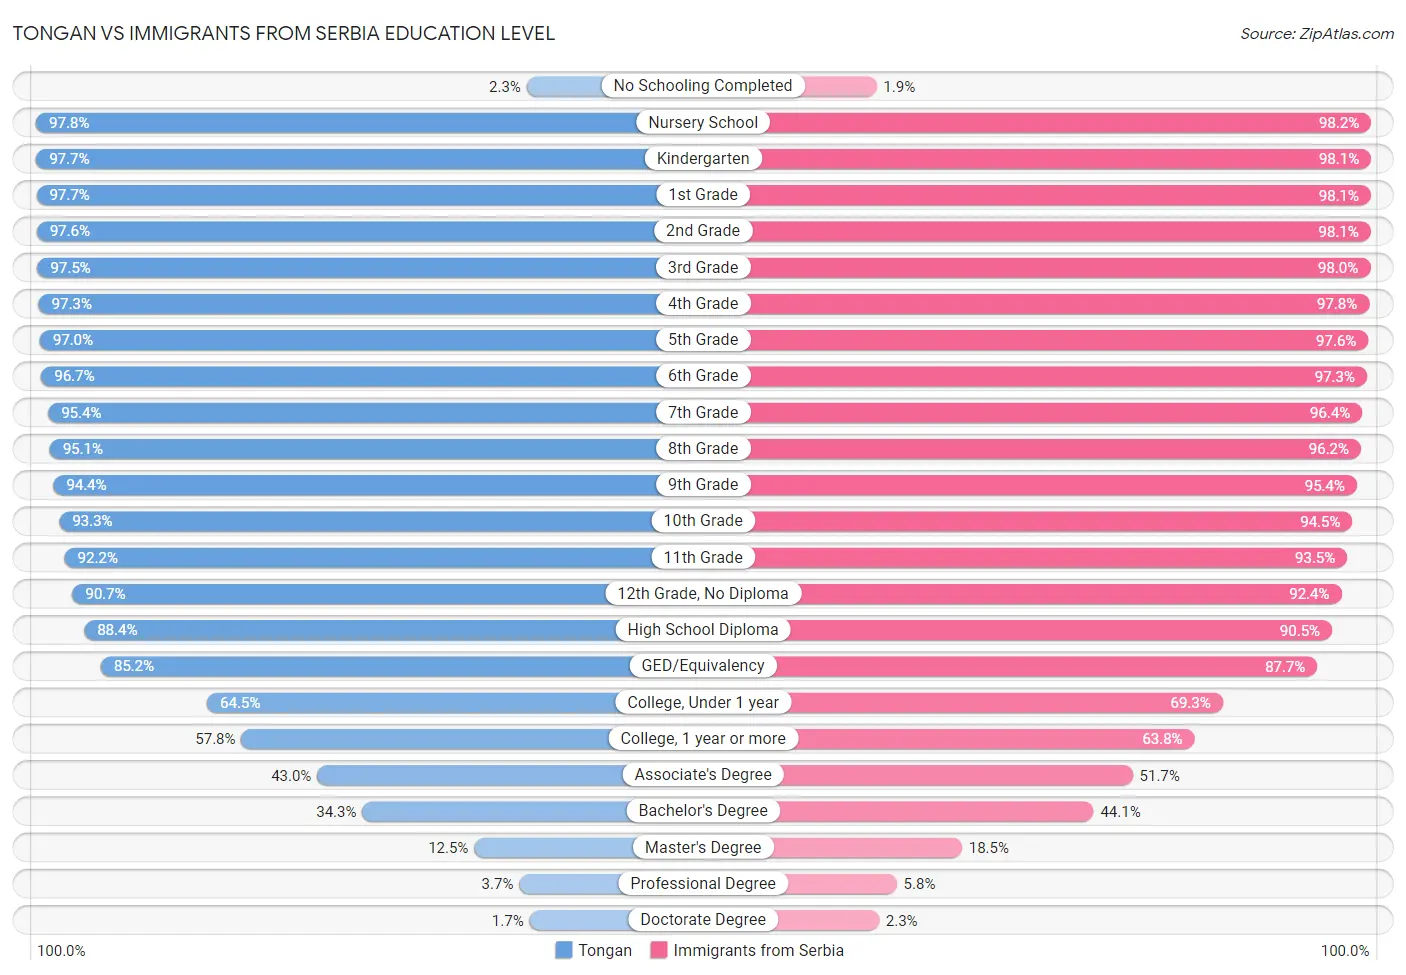 Tongan vs Immigrants from Serbia Education Level